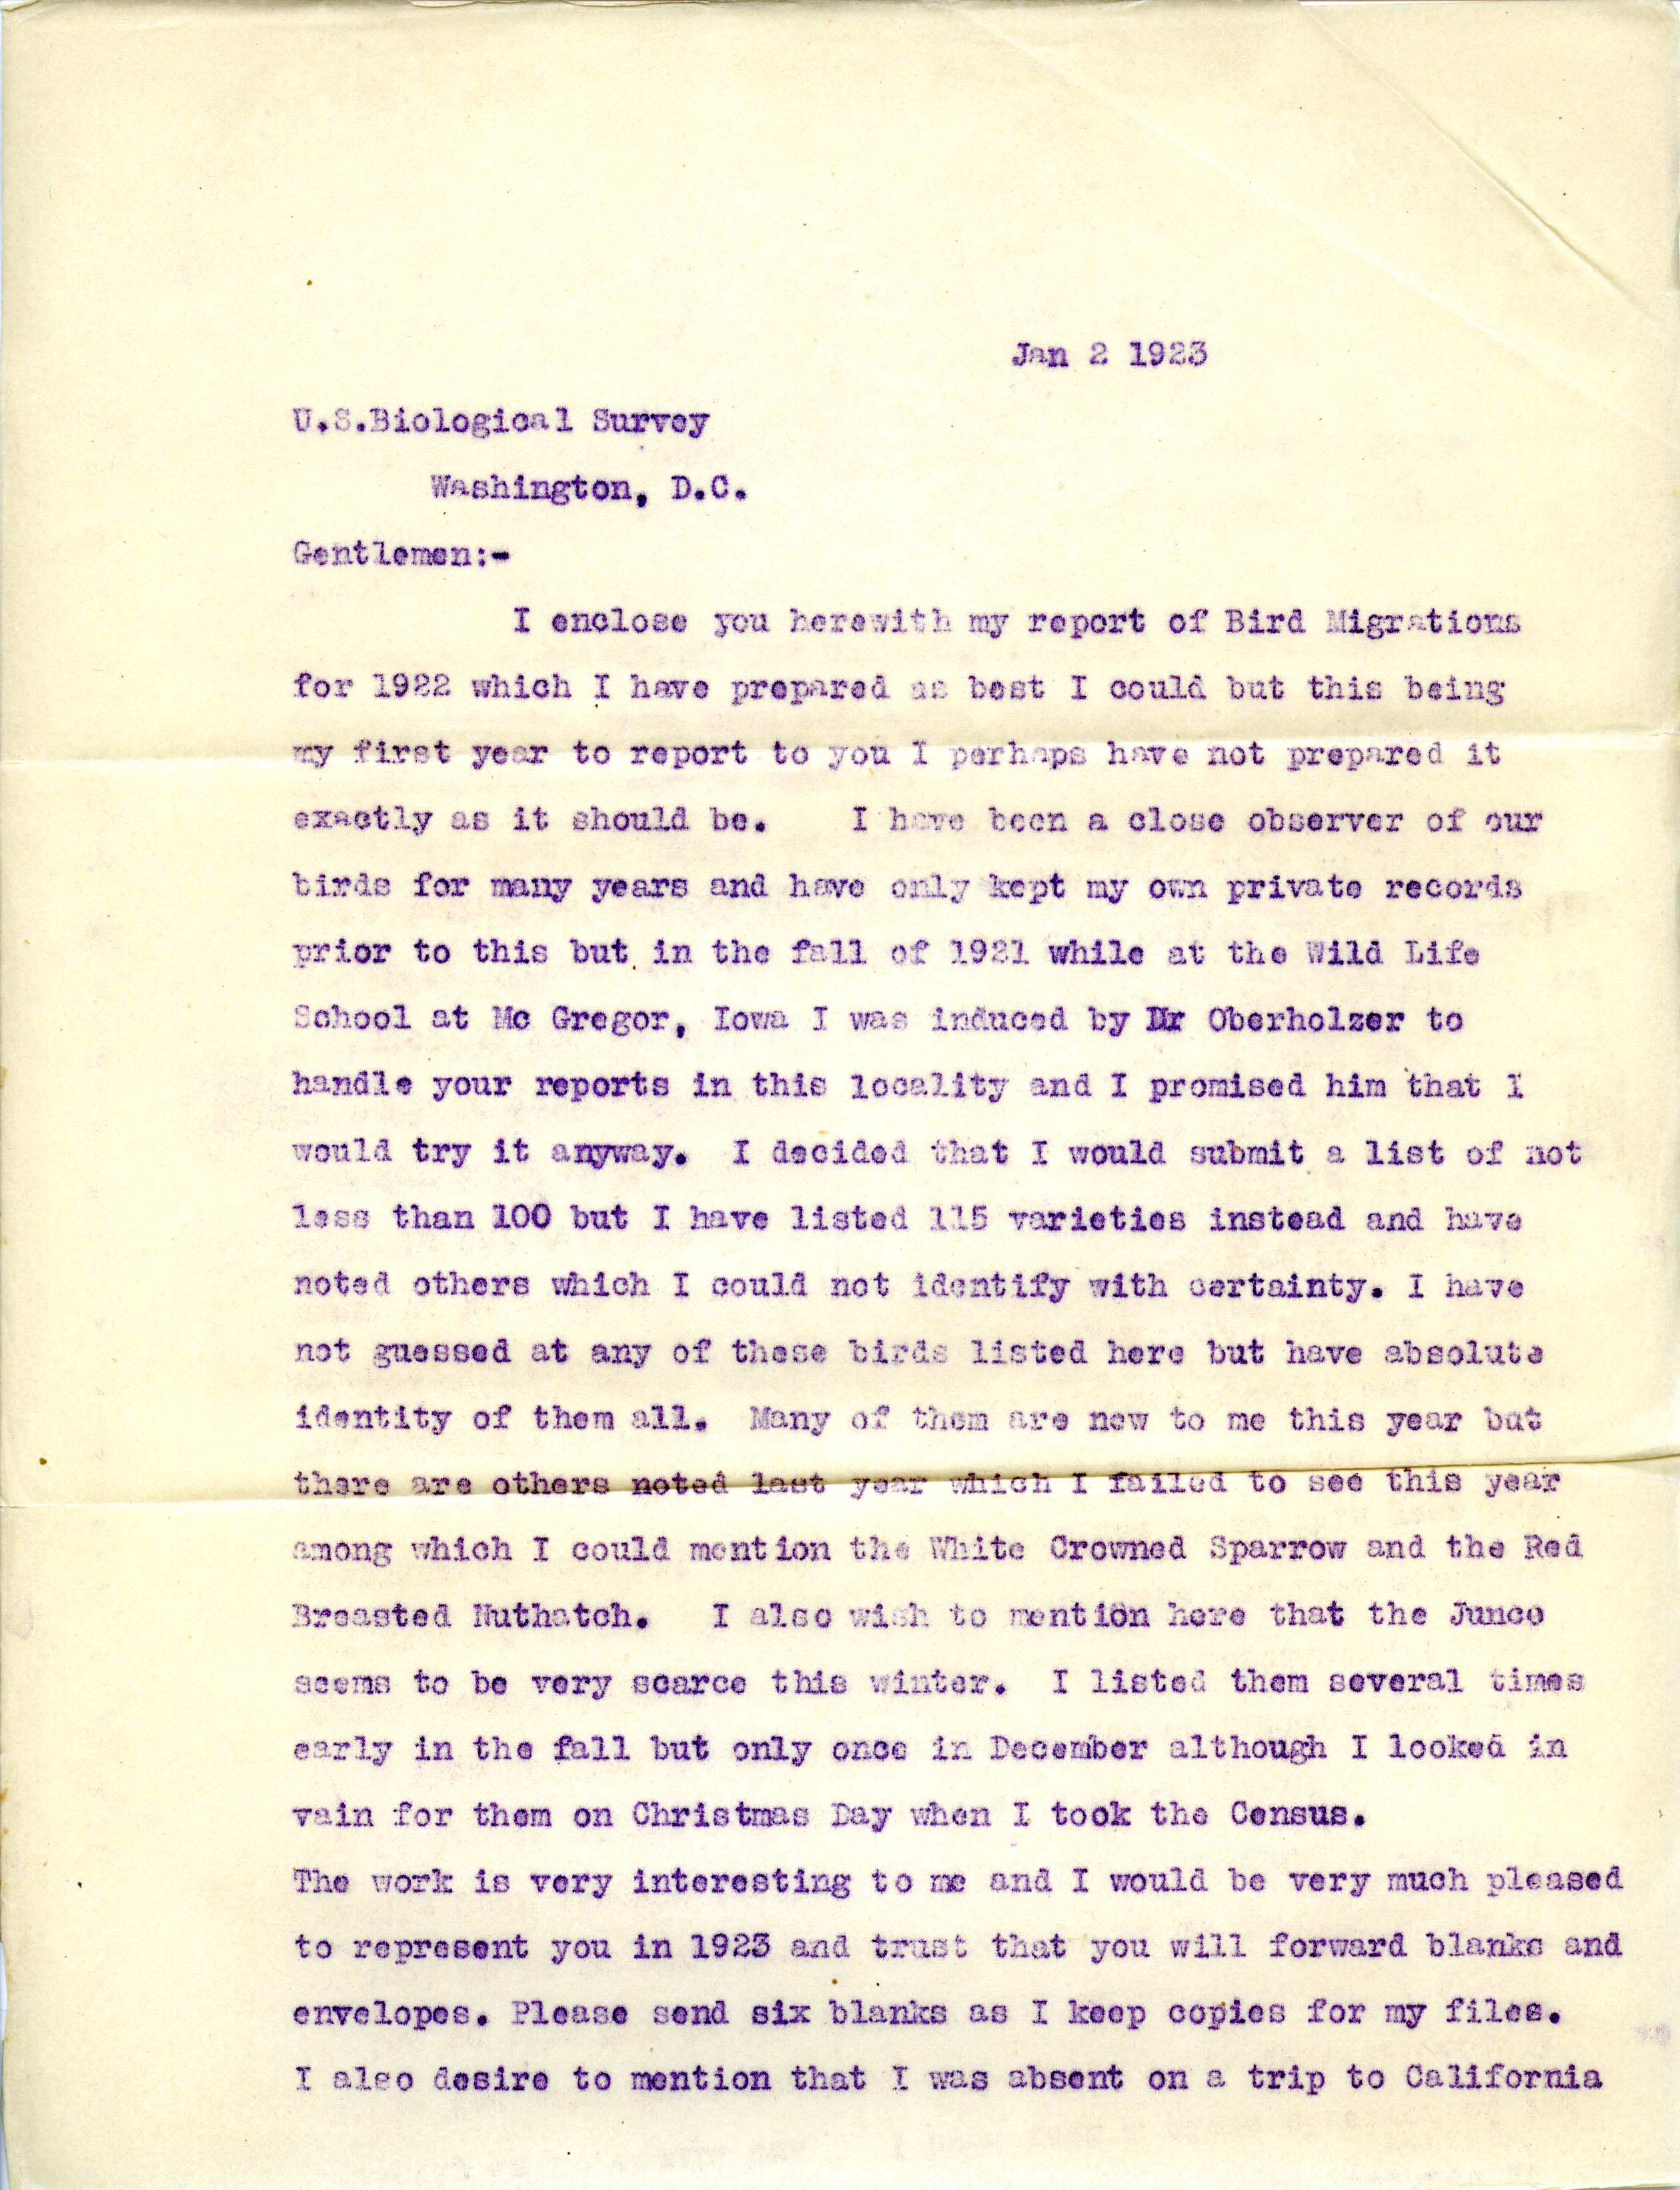 Walter Rosene letter to the United States Bureau of Biological Survey regarding a 1922 bird migration report, January 2, 1923